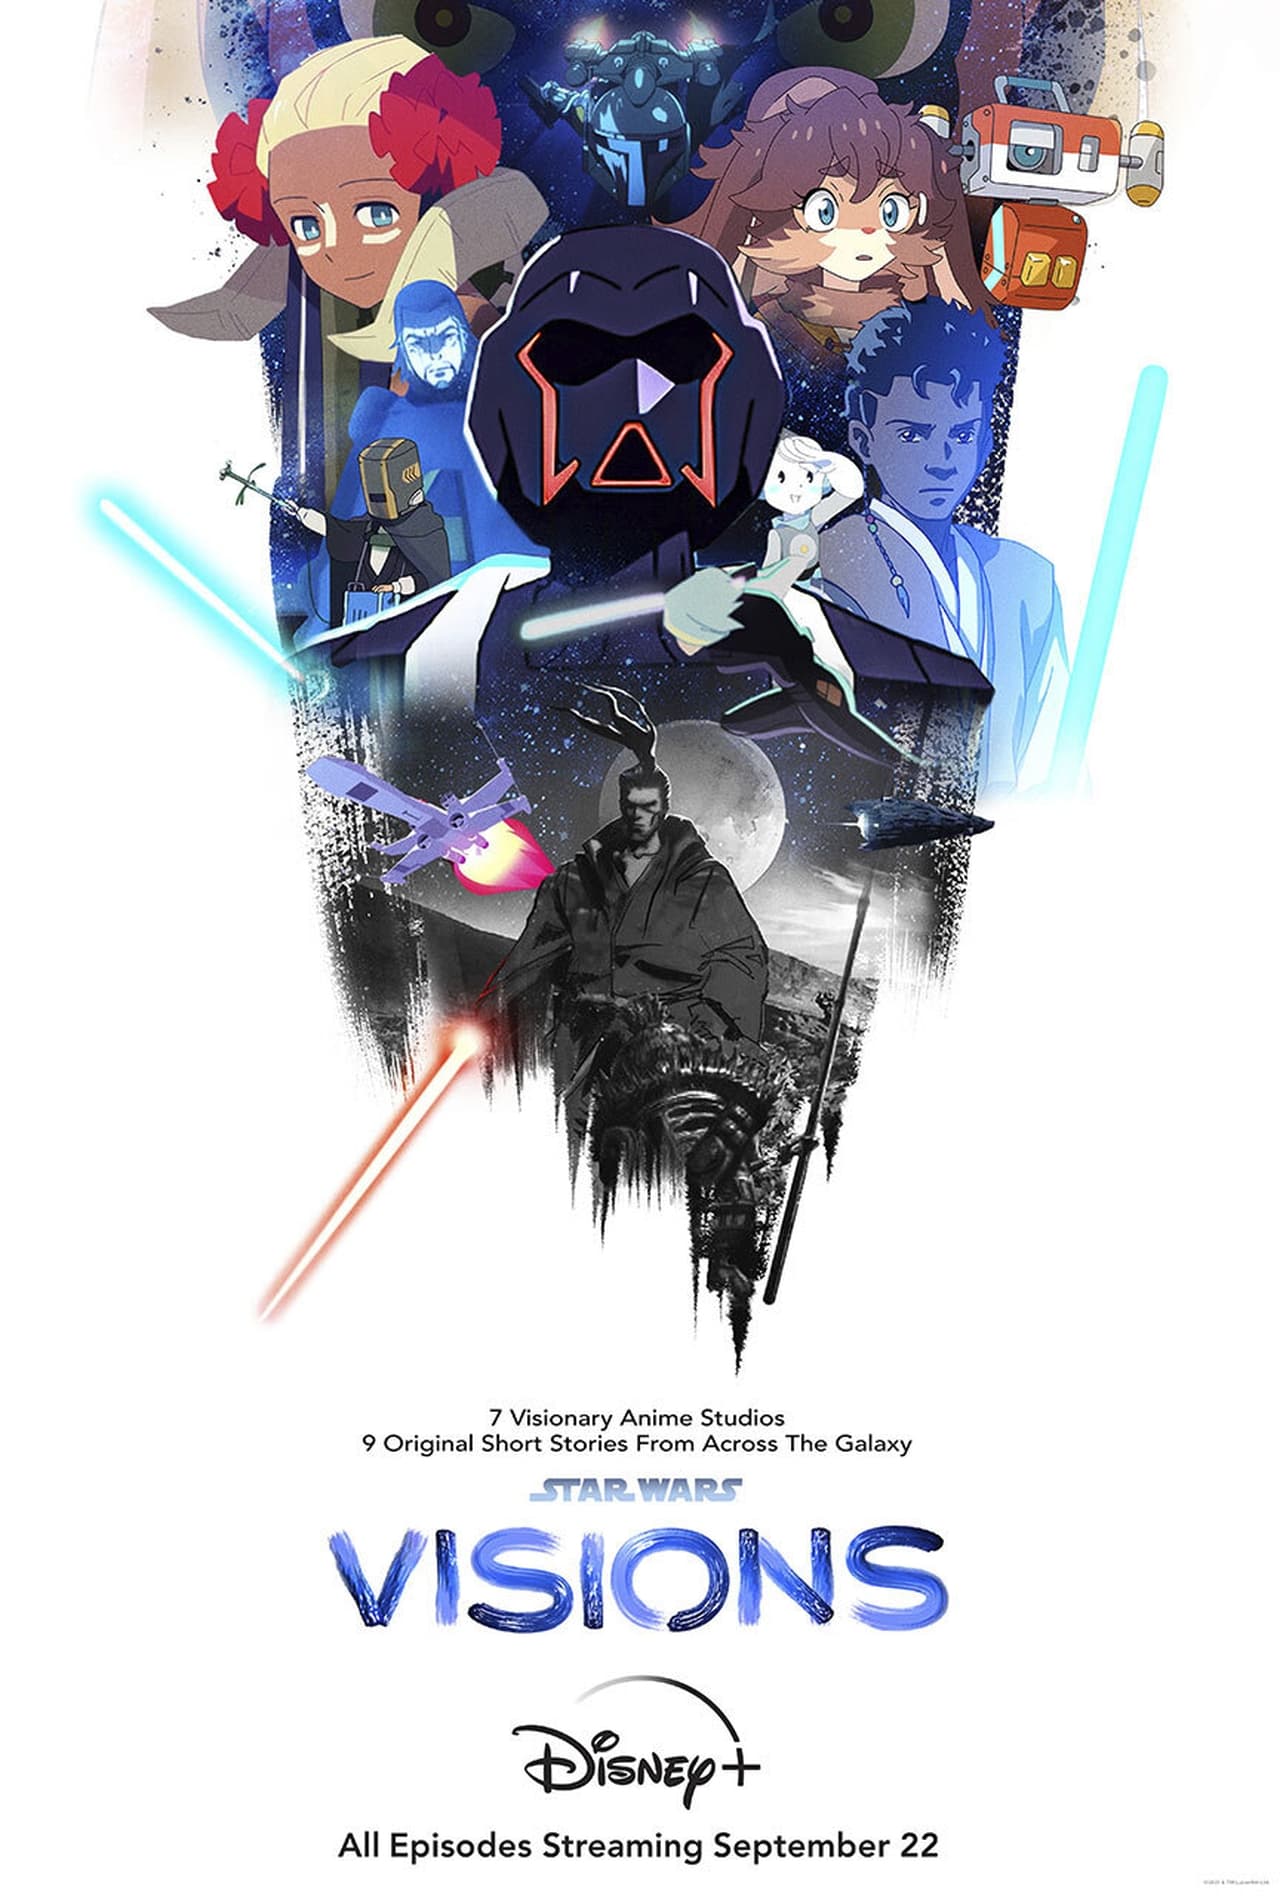 Star Wars: Visions (2021) S1 EP01&EP09 256Kbps 24Fps 48Khz 5.1Ch Disney+ DD+ E-AC3 Turkish Audio TAC